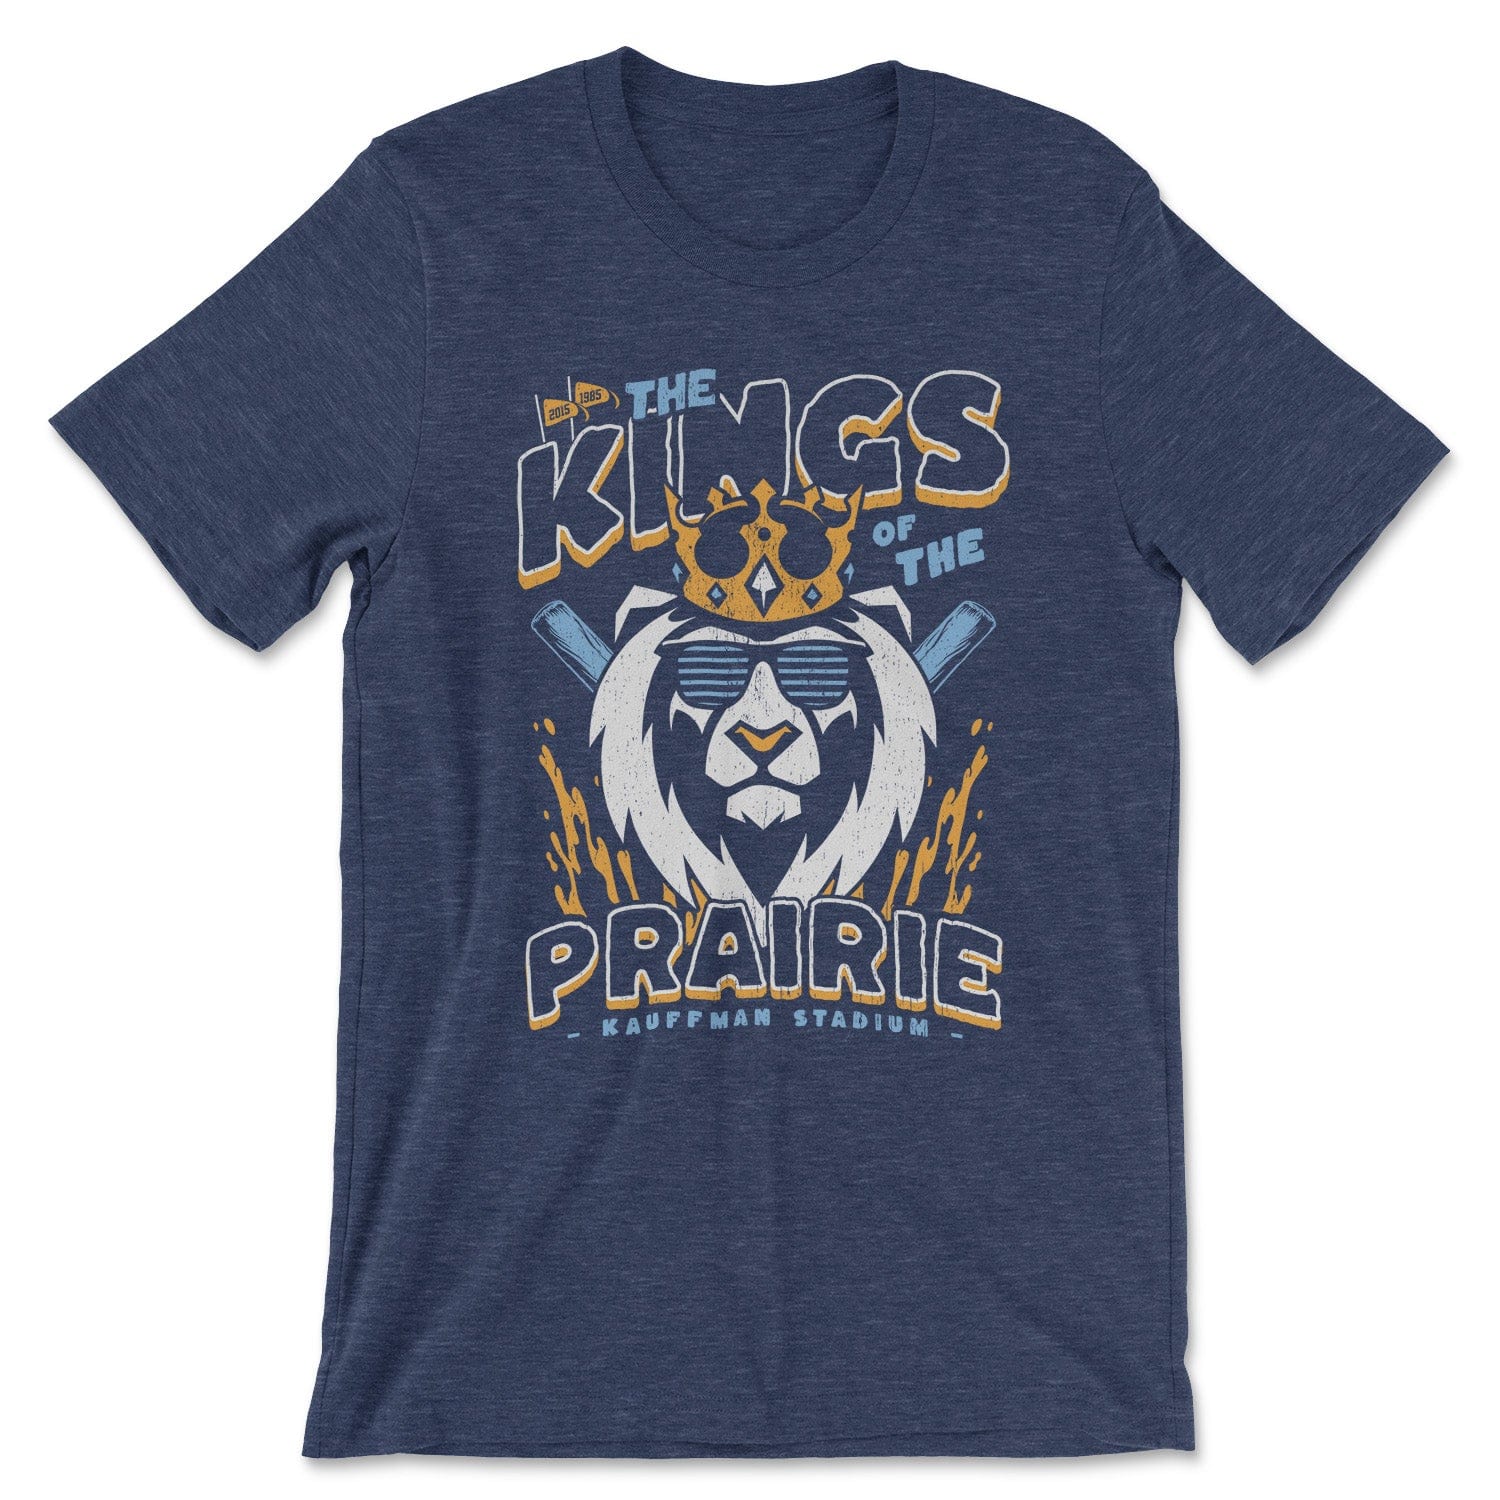 KC Swag Kansas City Royals blue, powder, gold, white PRAIRIE KINGS on heather navy unisex t-shirt 